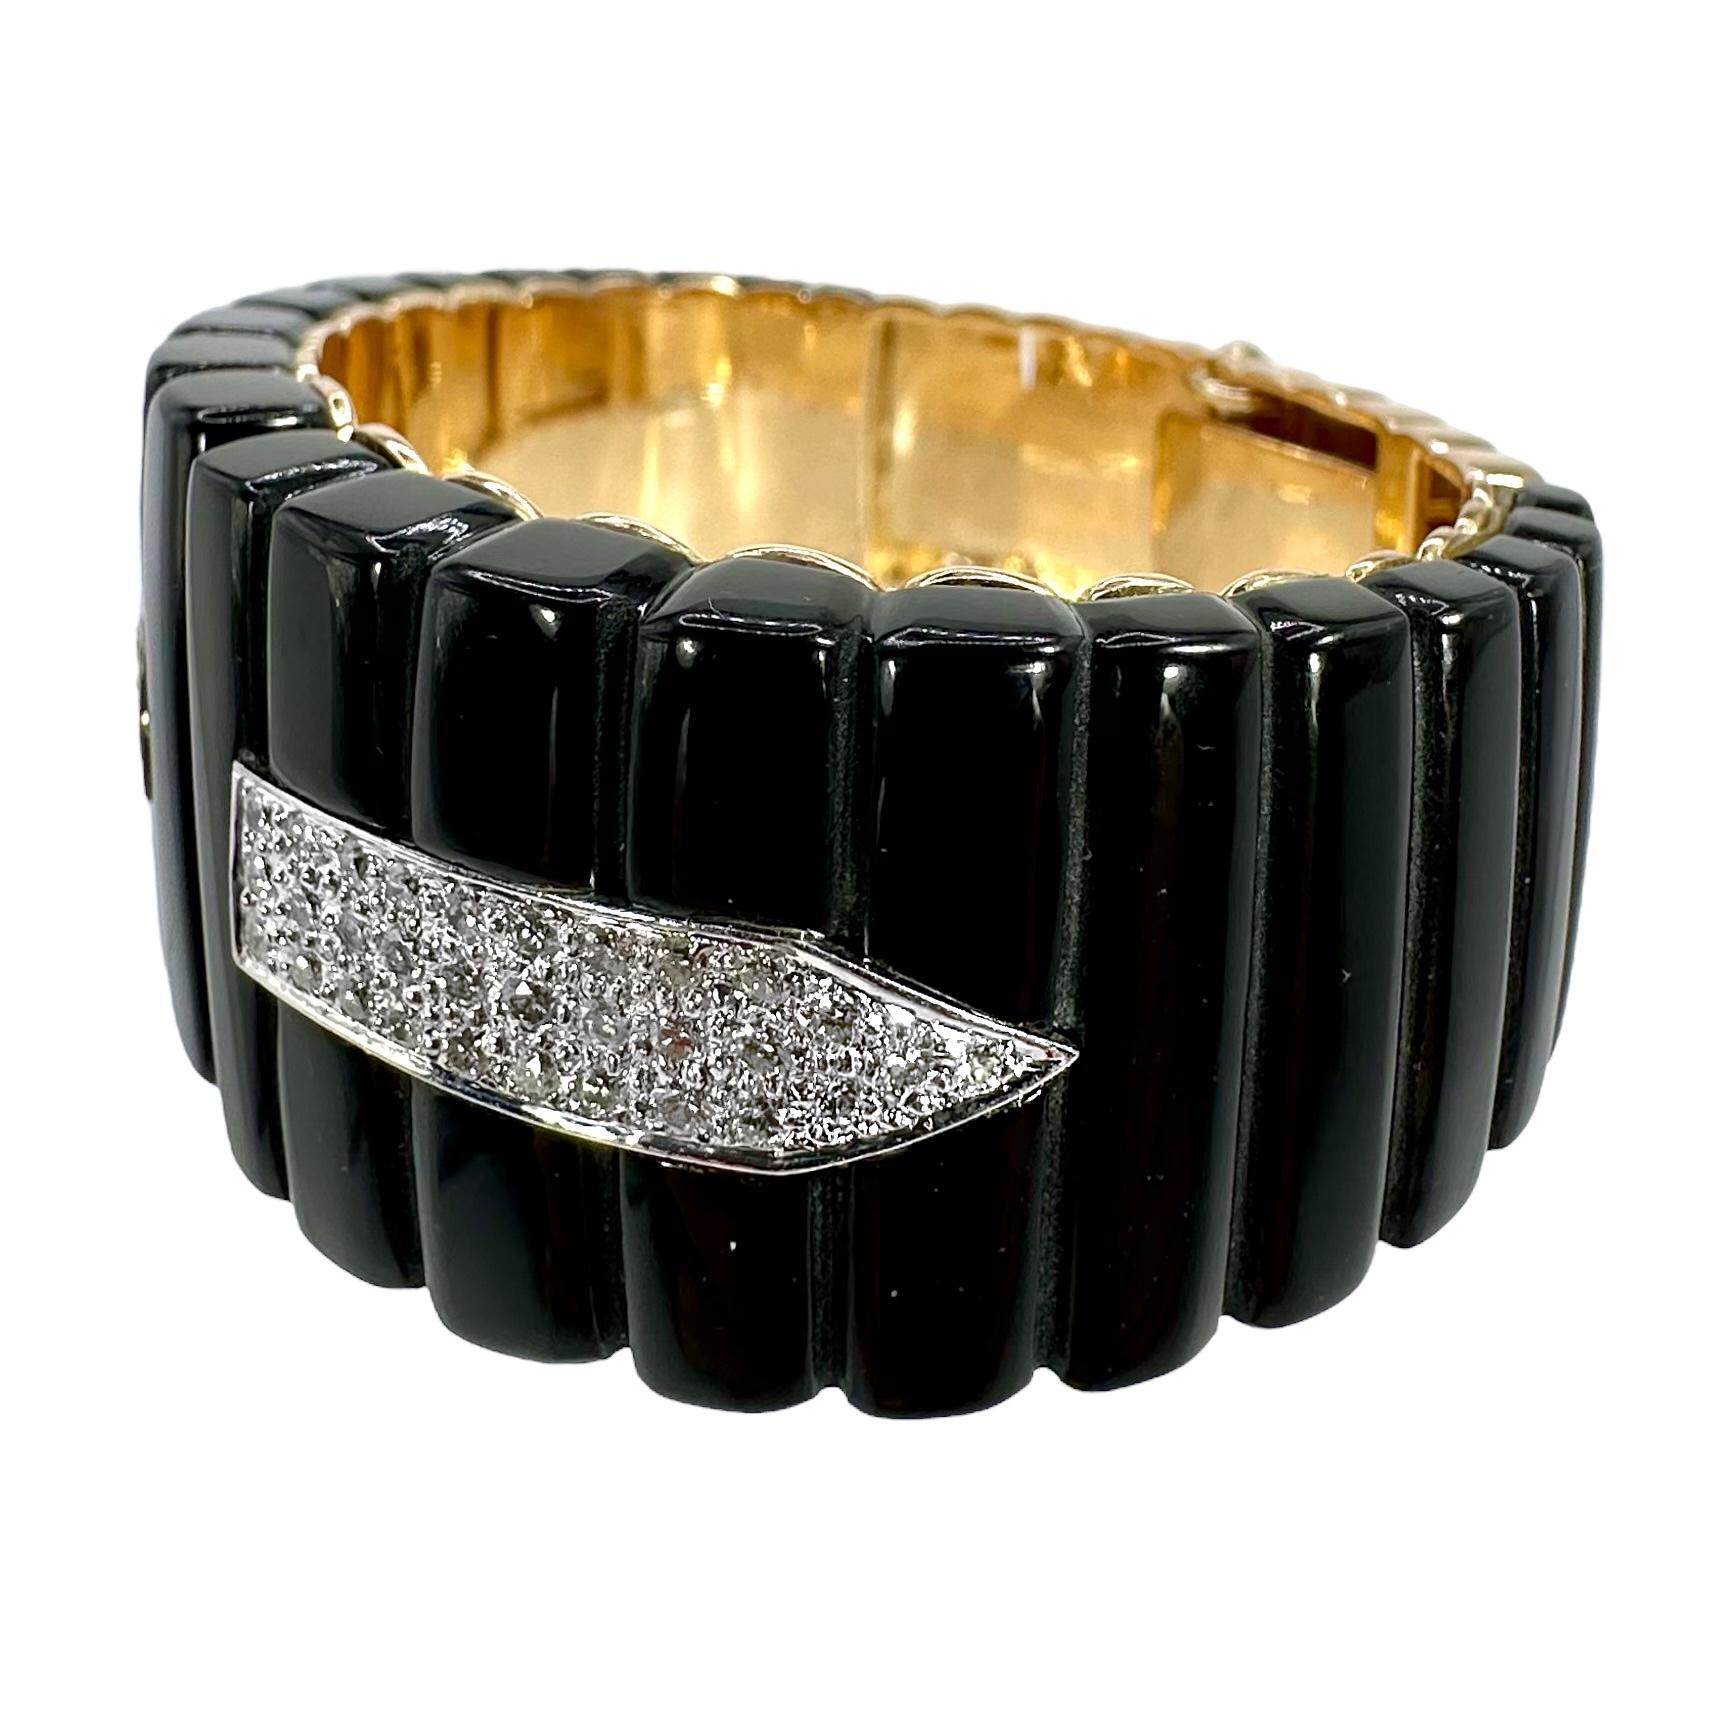 Brilliant Cut Bold & Stylish Late-20th Century Gold, Onyx & Diamond Cuff Bracelet 1 Inch Wide For Sale